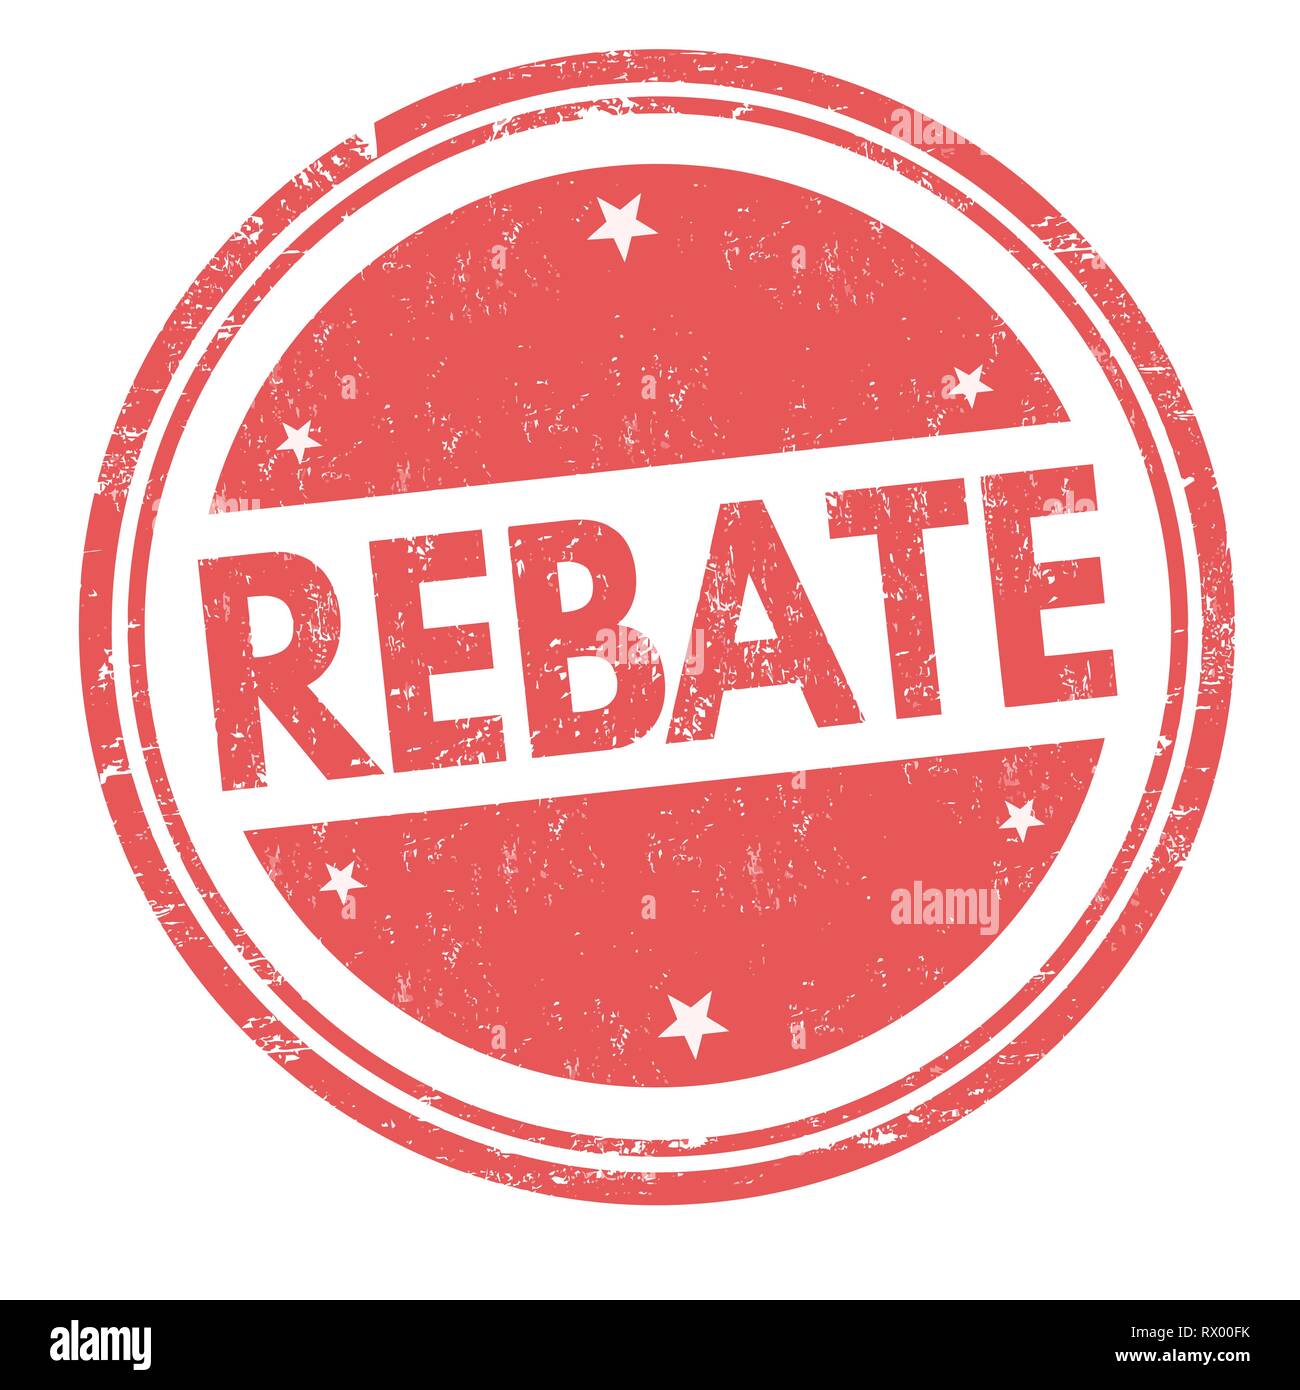 rebate-sign-or-stamp-on-white-background-vector-illustration-stock